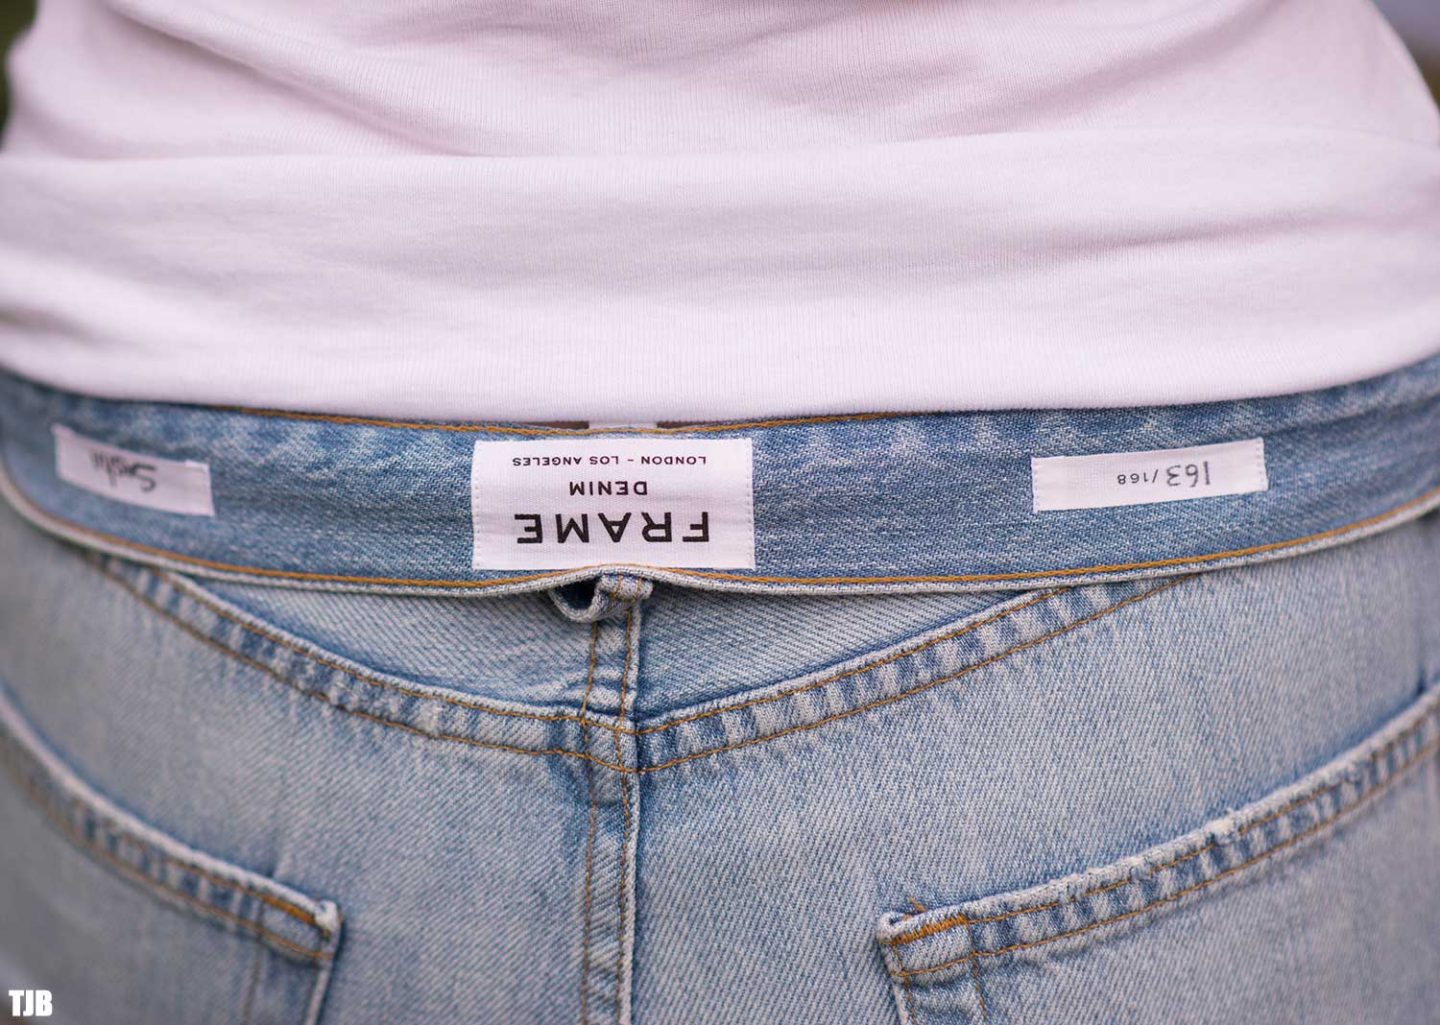 FRAME Sasha P Le Original Jeans in Bushwick Review - THE JEANS BLOG